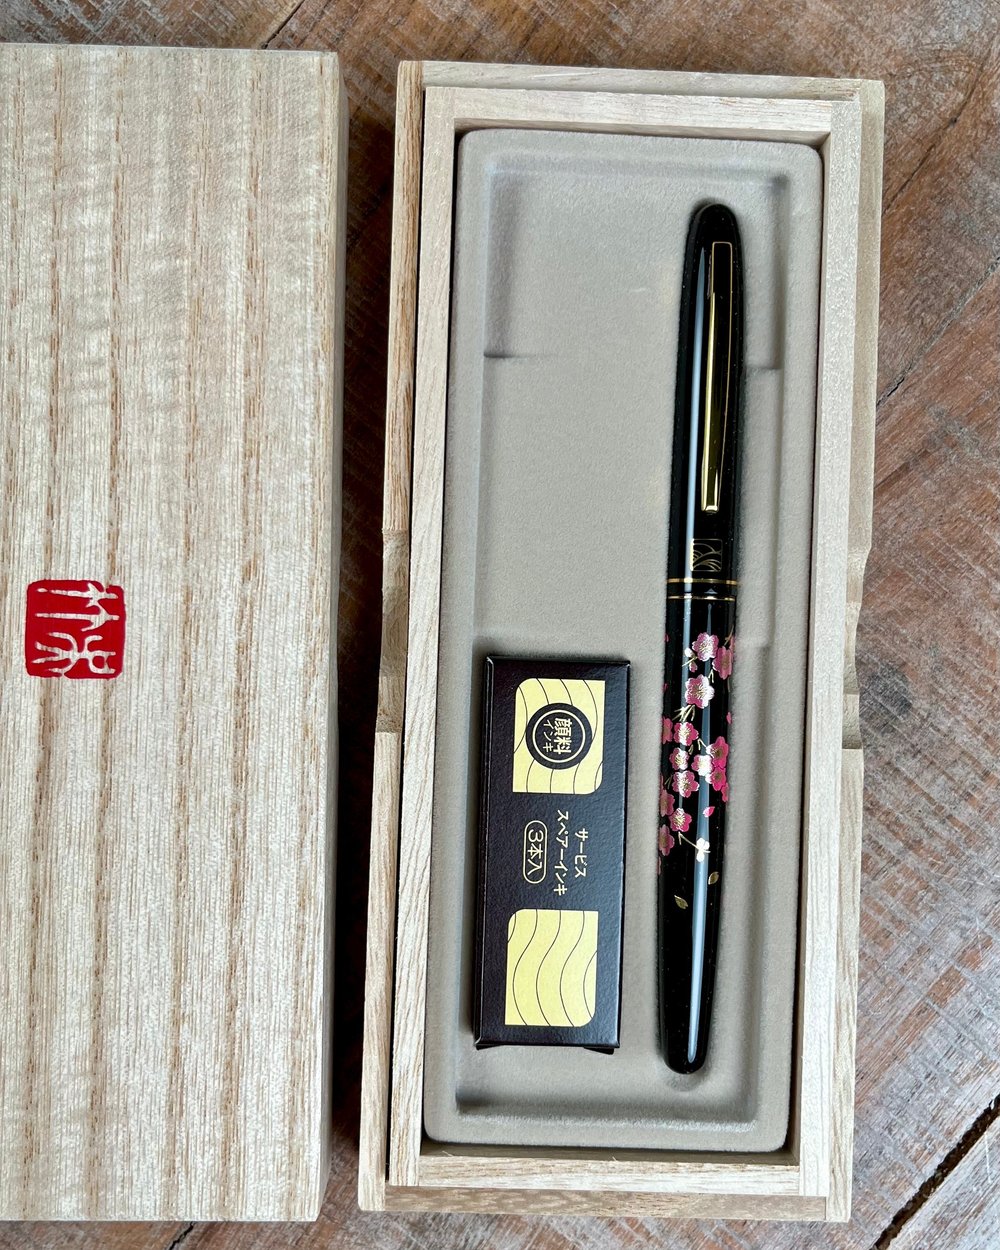 Kuretake Brush Pen Fountain Pen Makie Red Fuji Black Axis Wiht Box